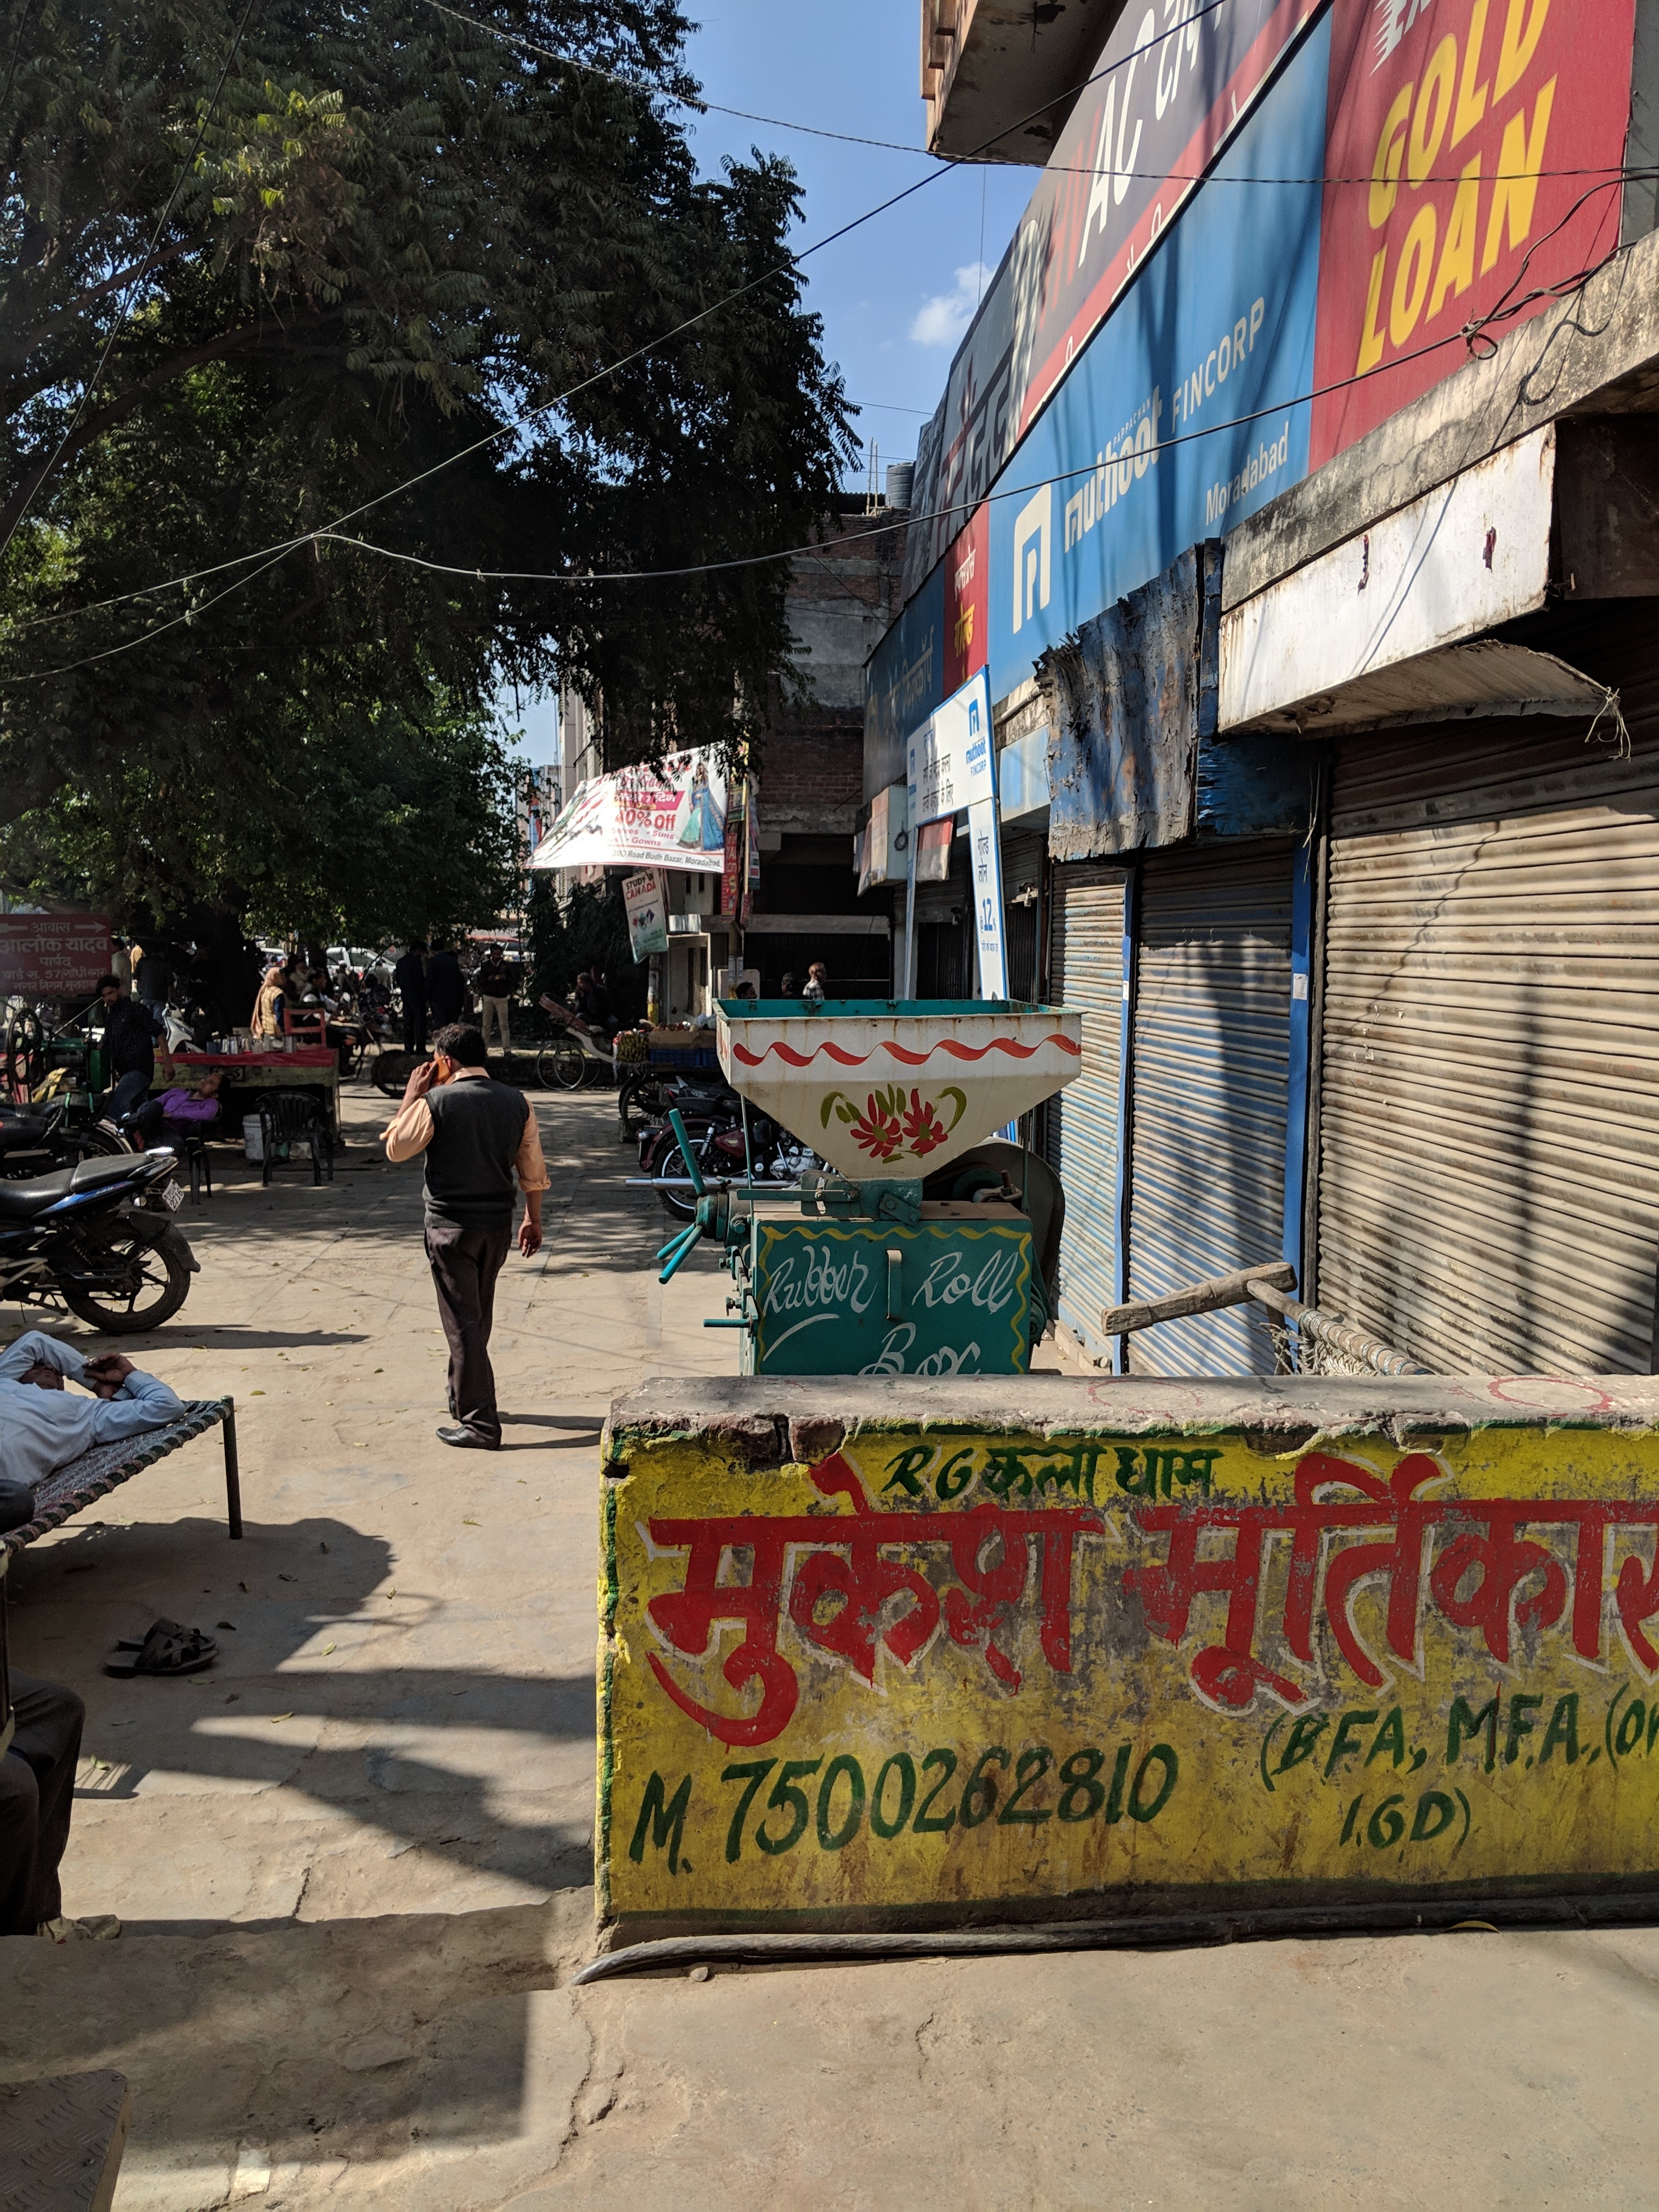 Muthoot Fincorp Gold Loan Services in Gandhi Nagar, Moradabad, Uttar Pradesh